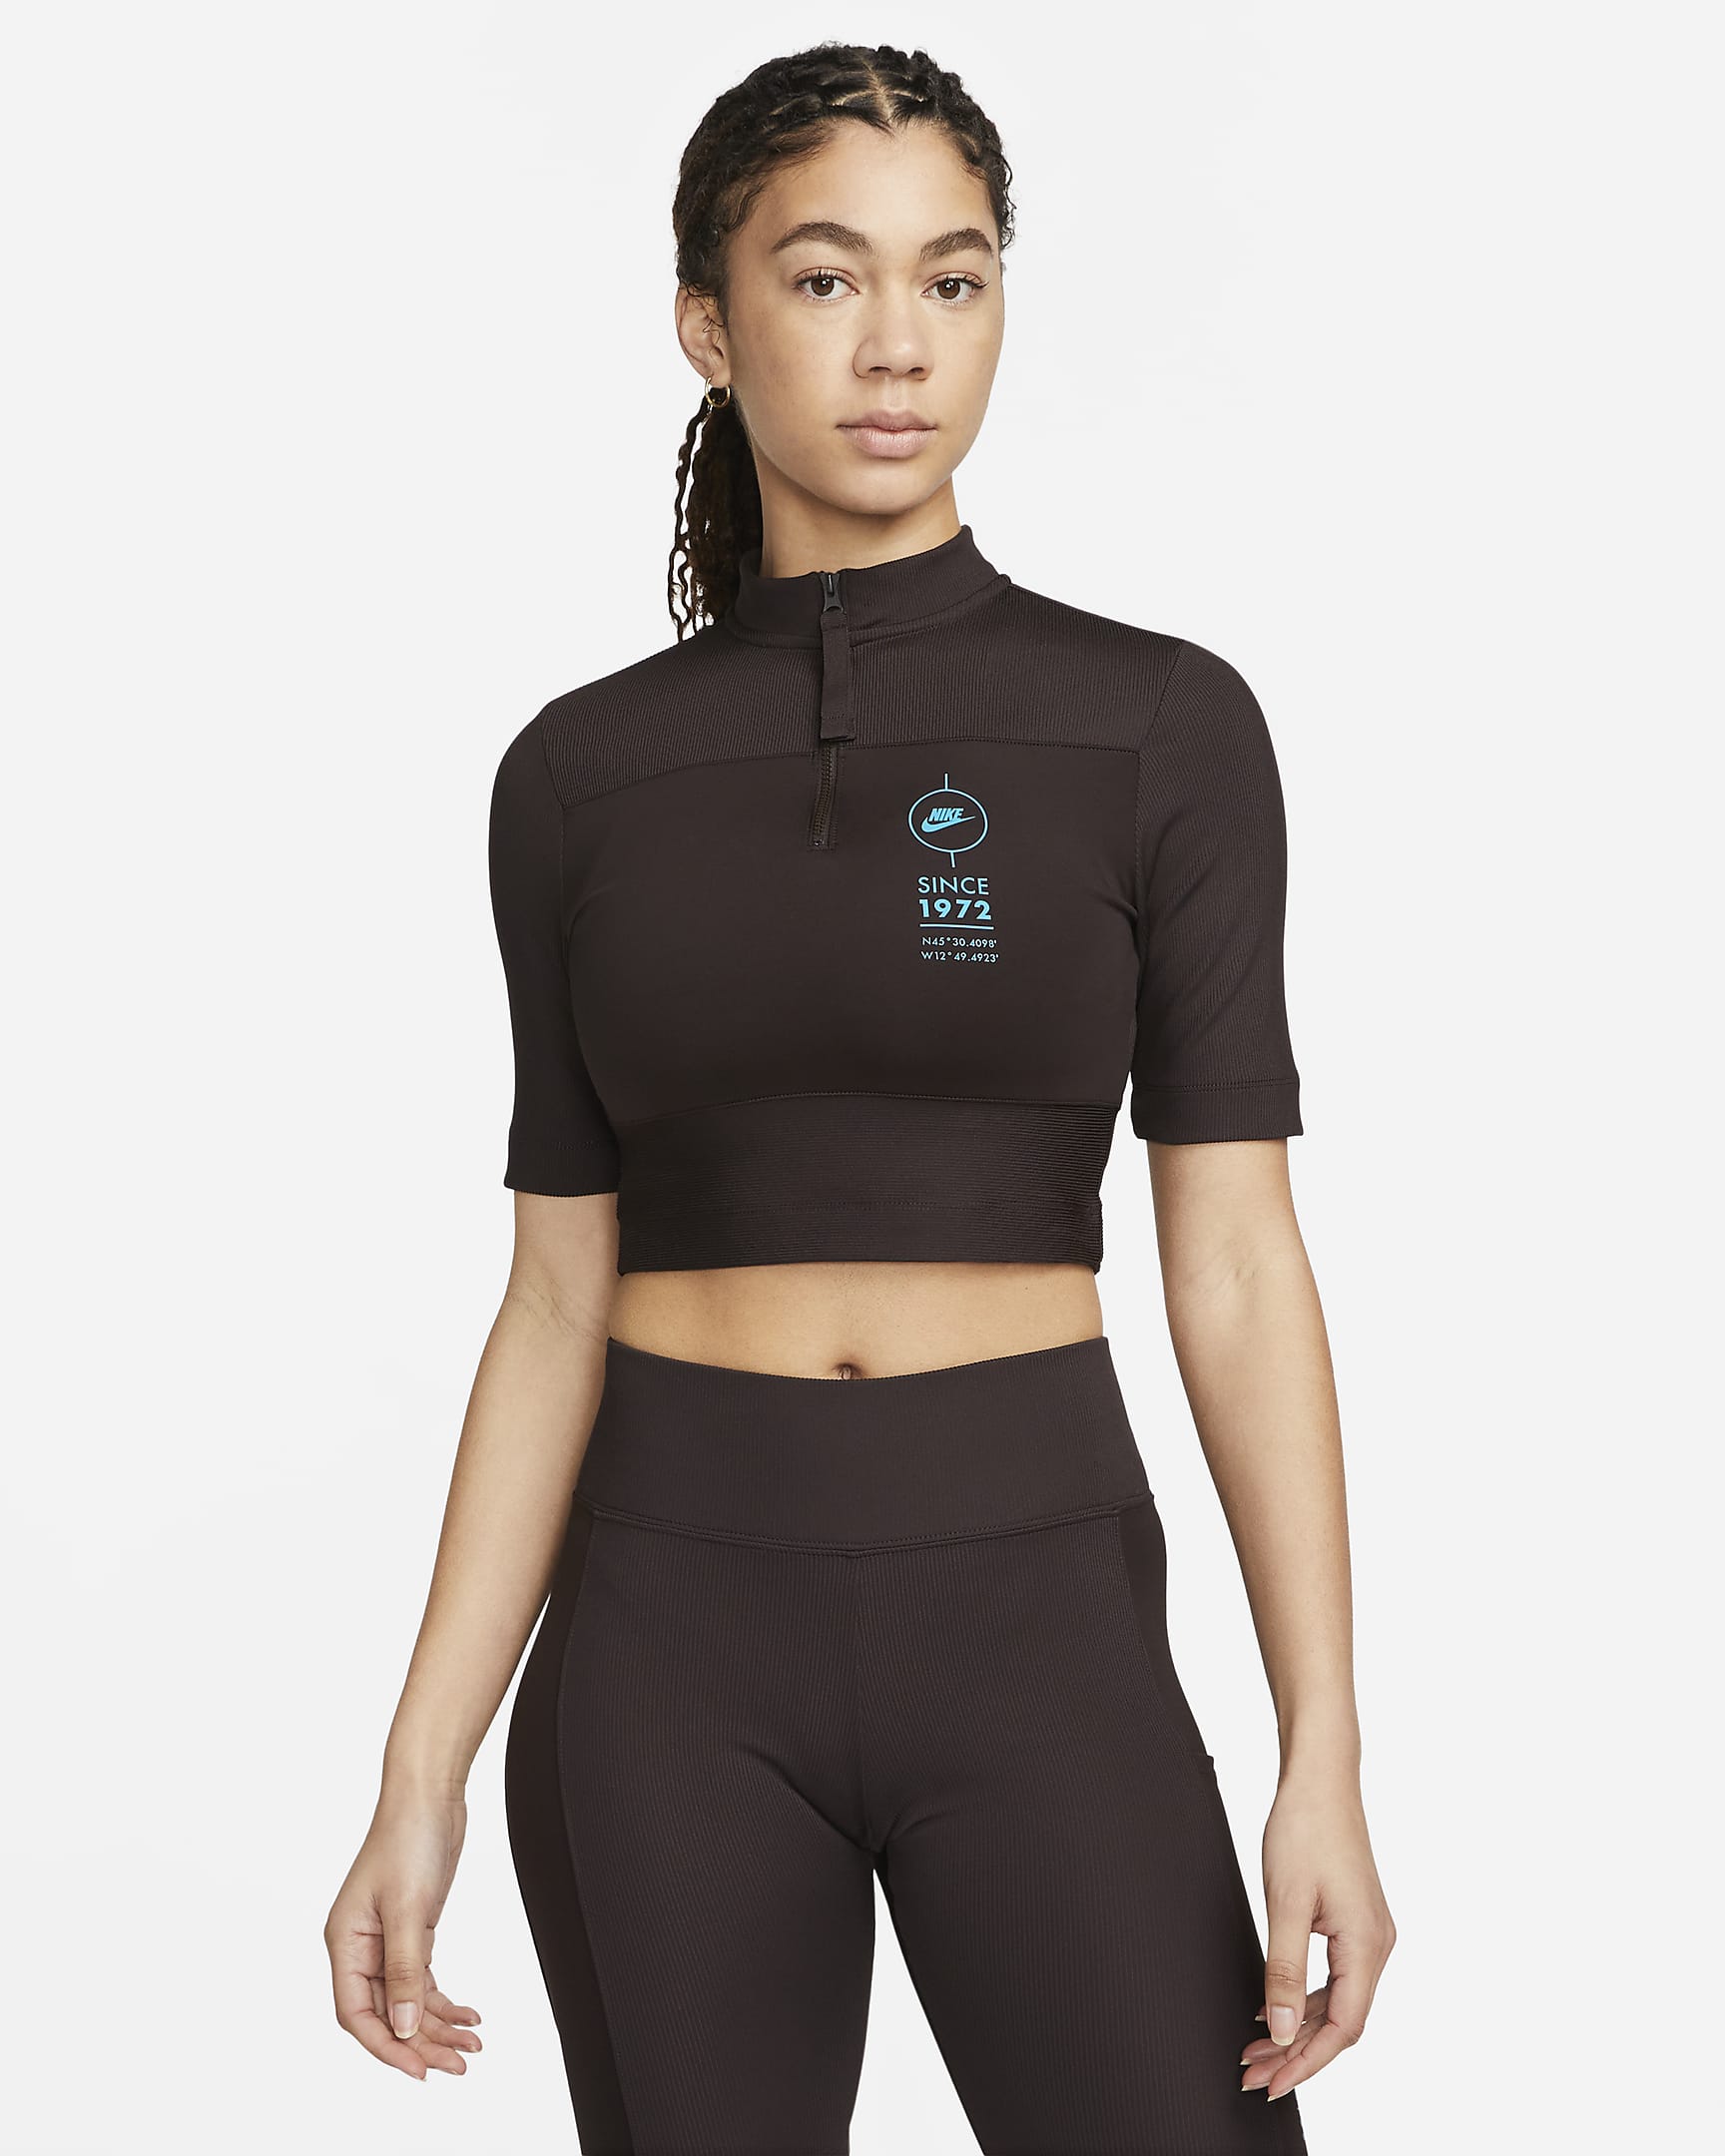 Nike Sportswear Women's Ribbed Short-Sleeve Top. Nike ZA